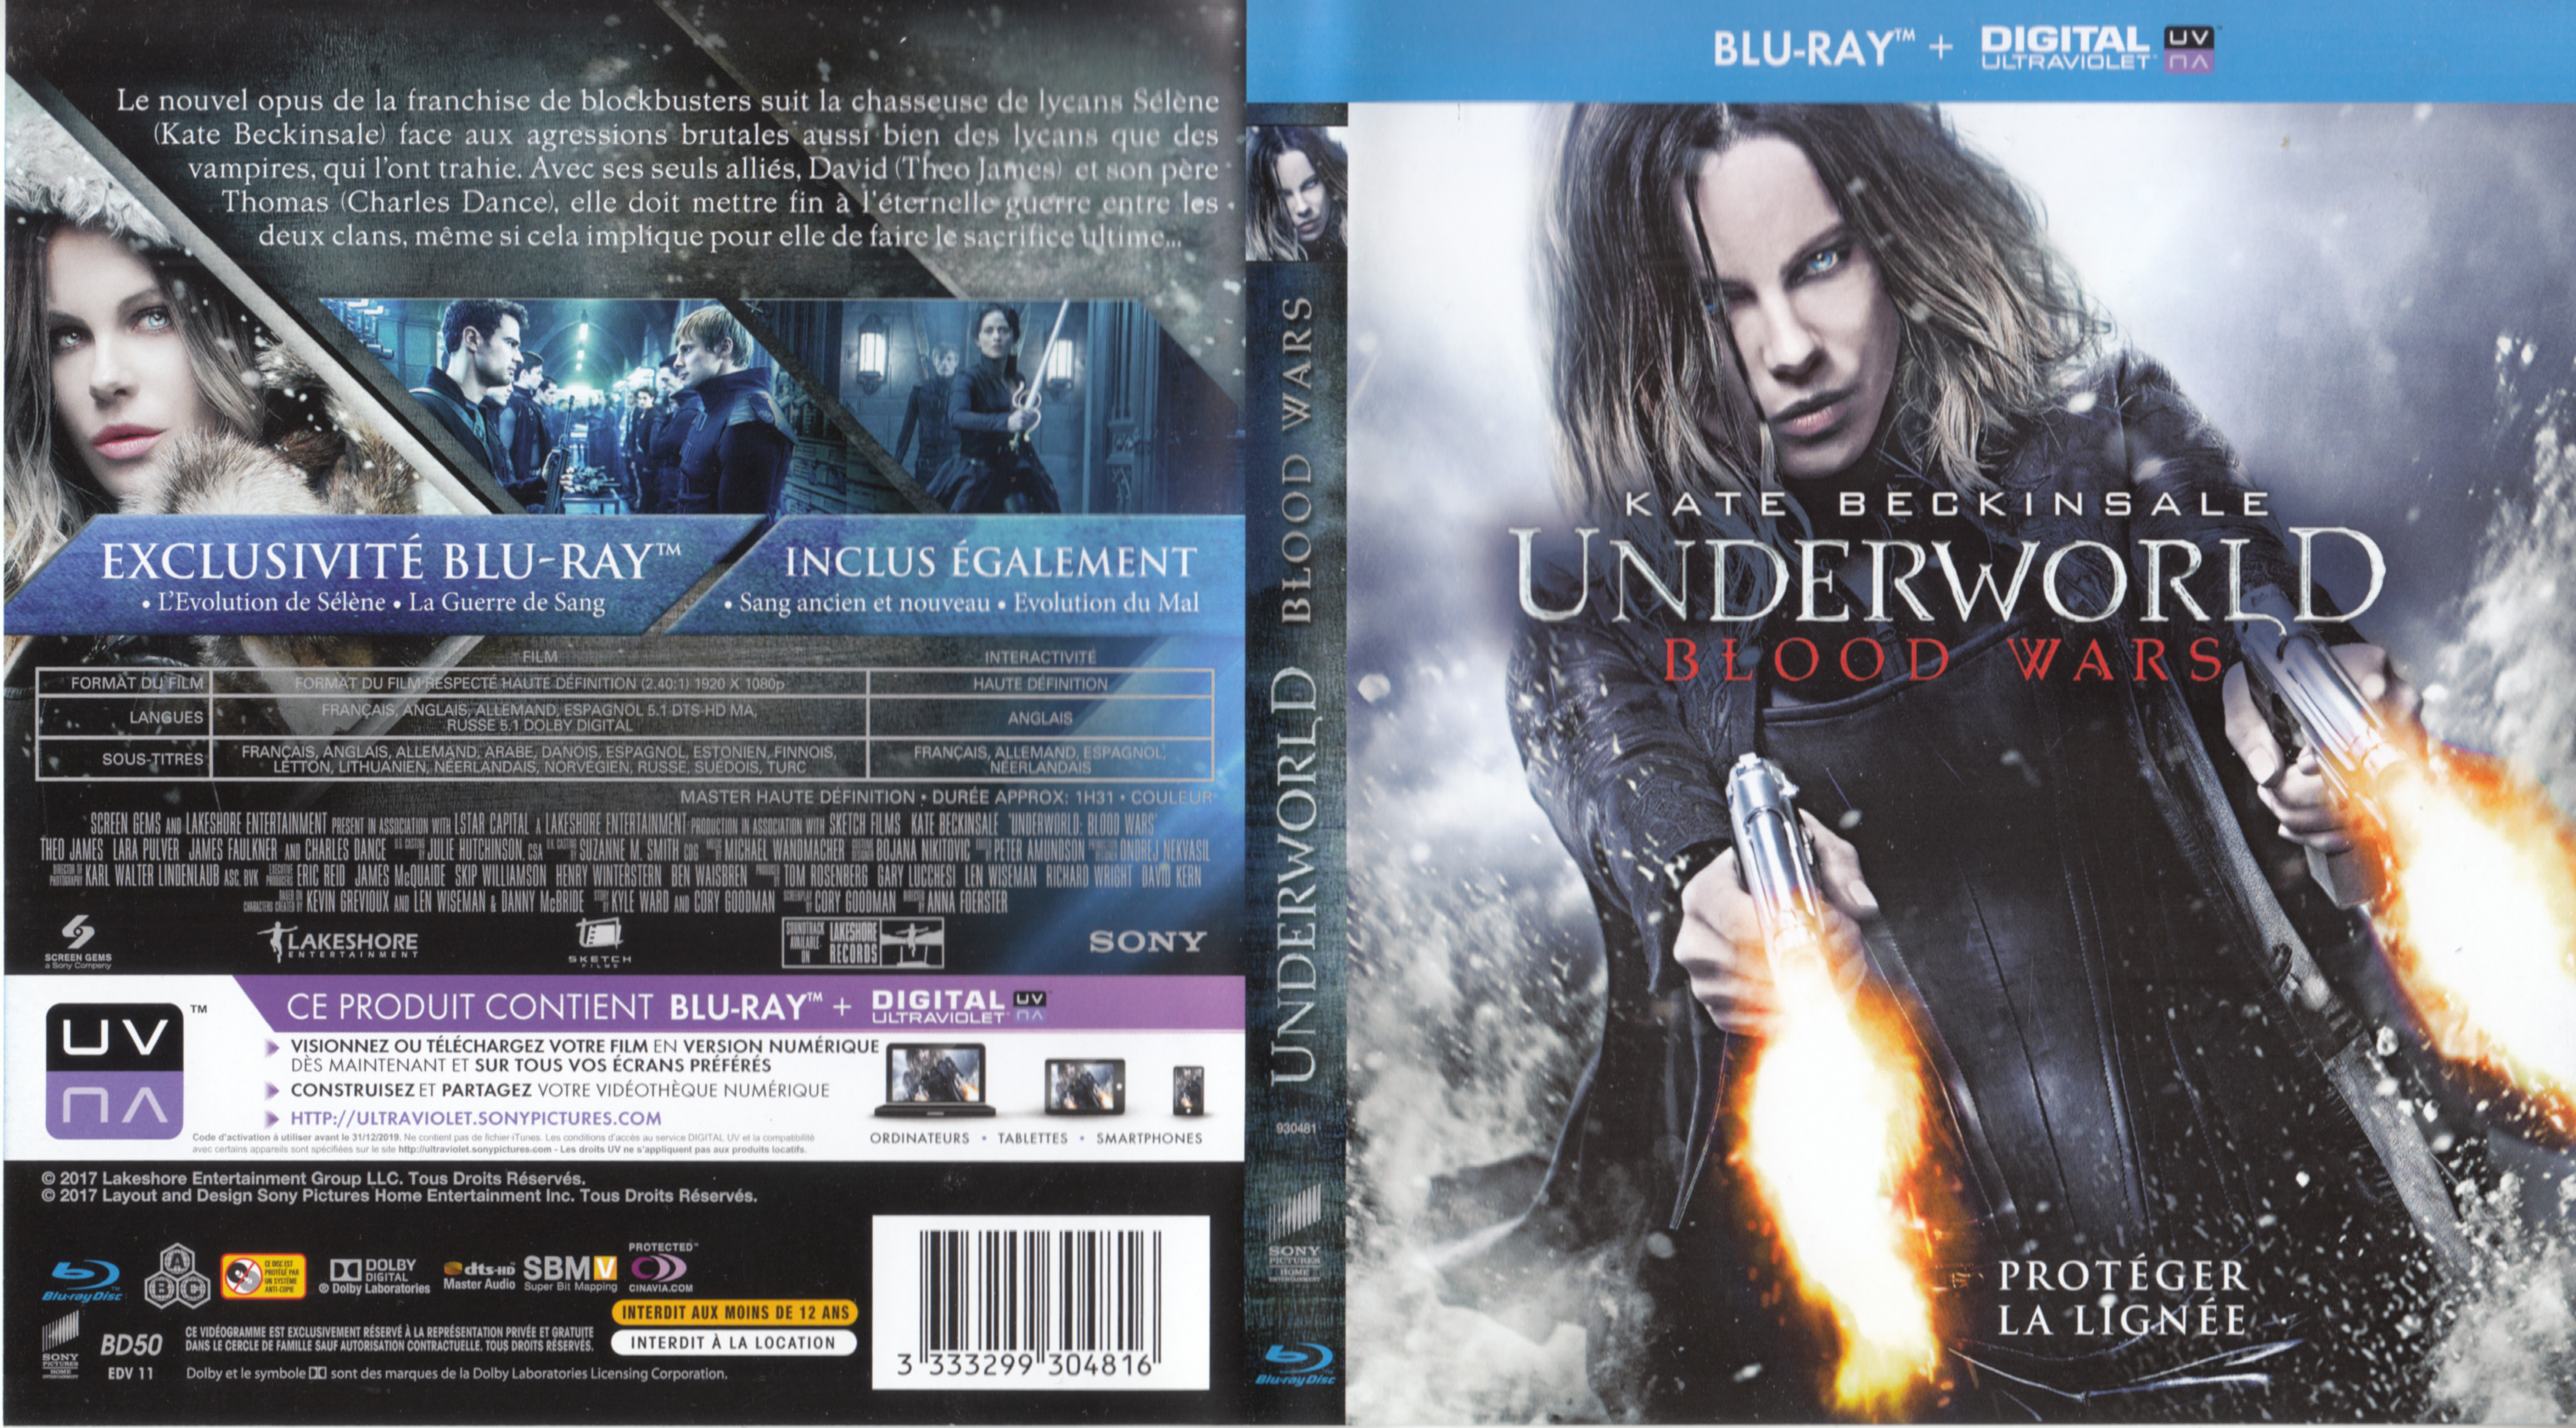 Jaquette DVD Underworld Blood Wars (BLU-RAY) v2